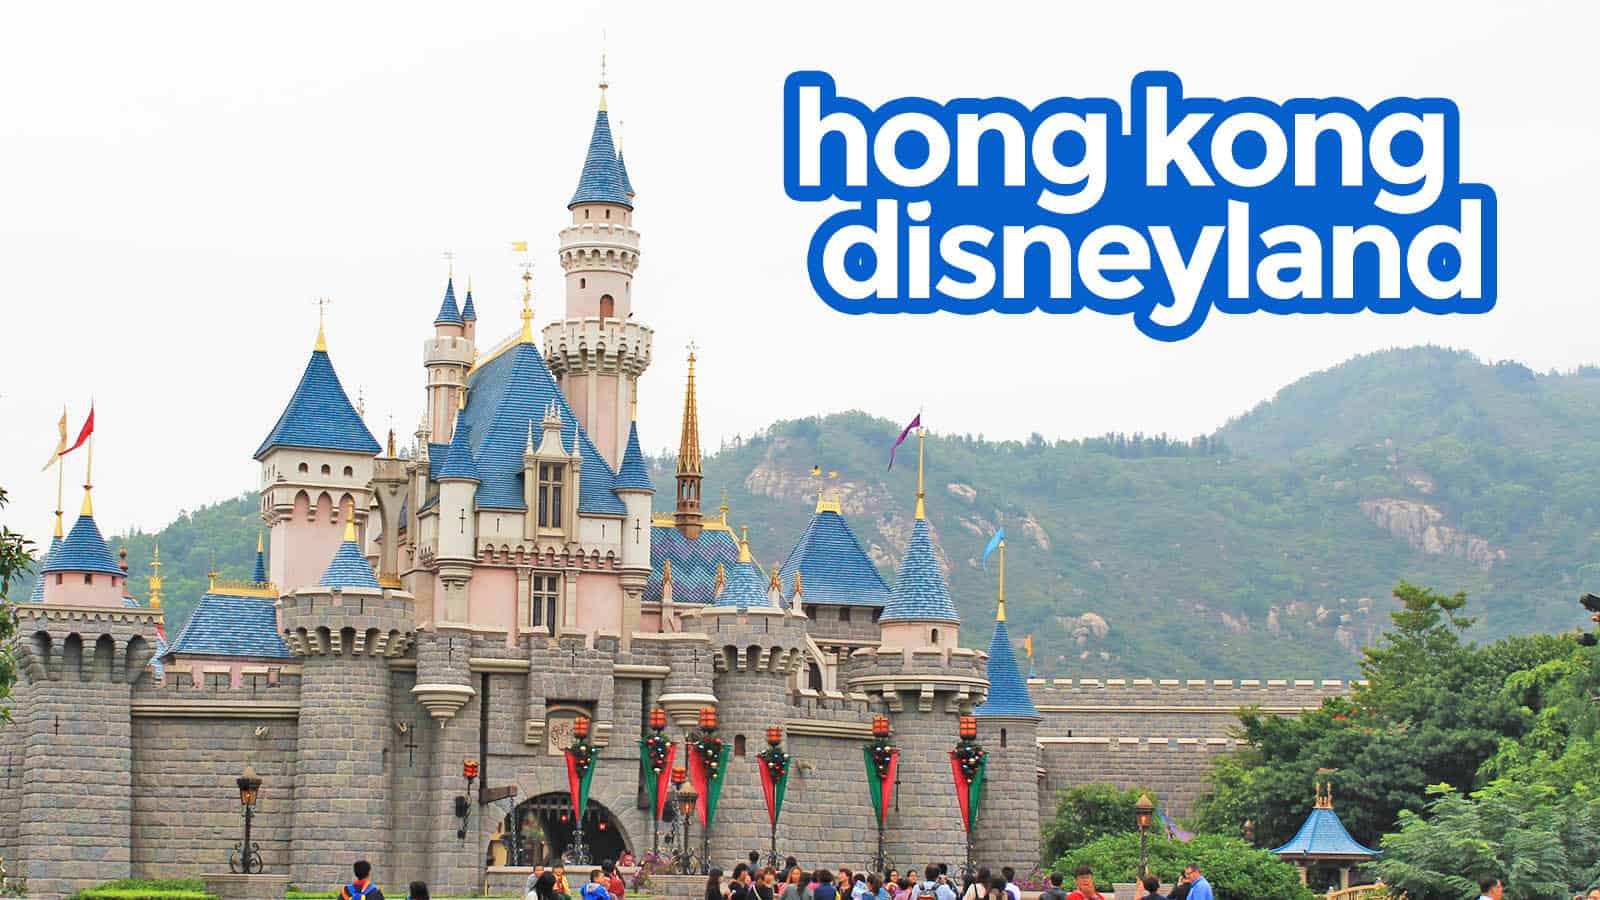 HONG KONG DISNEYLAND: Discounted Tickets & Travel Guide